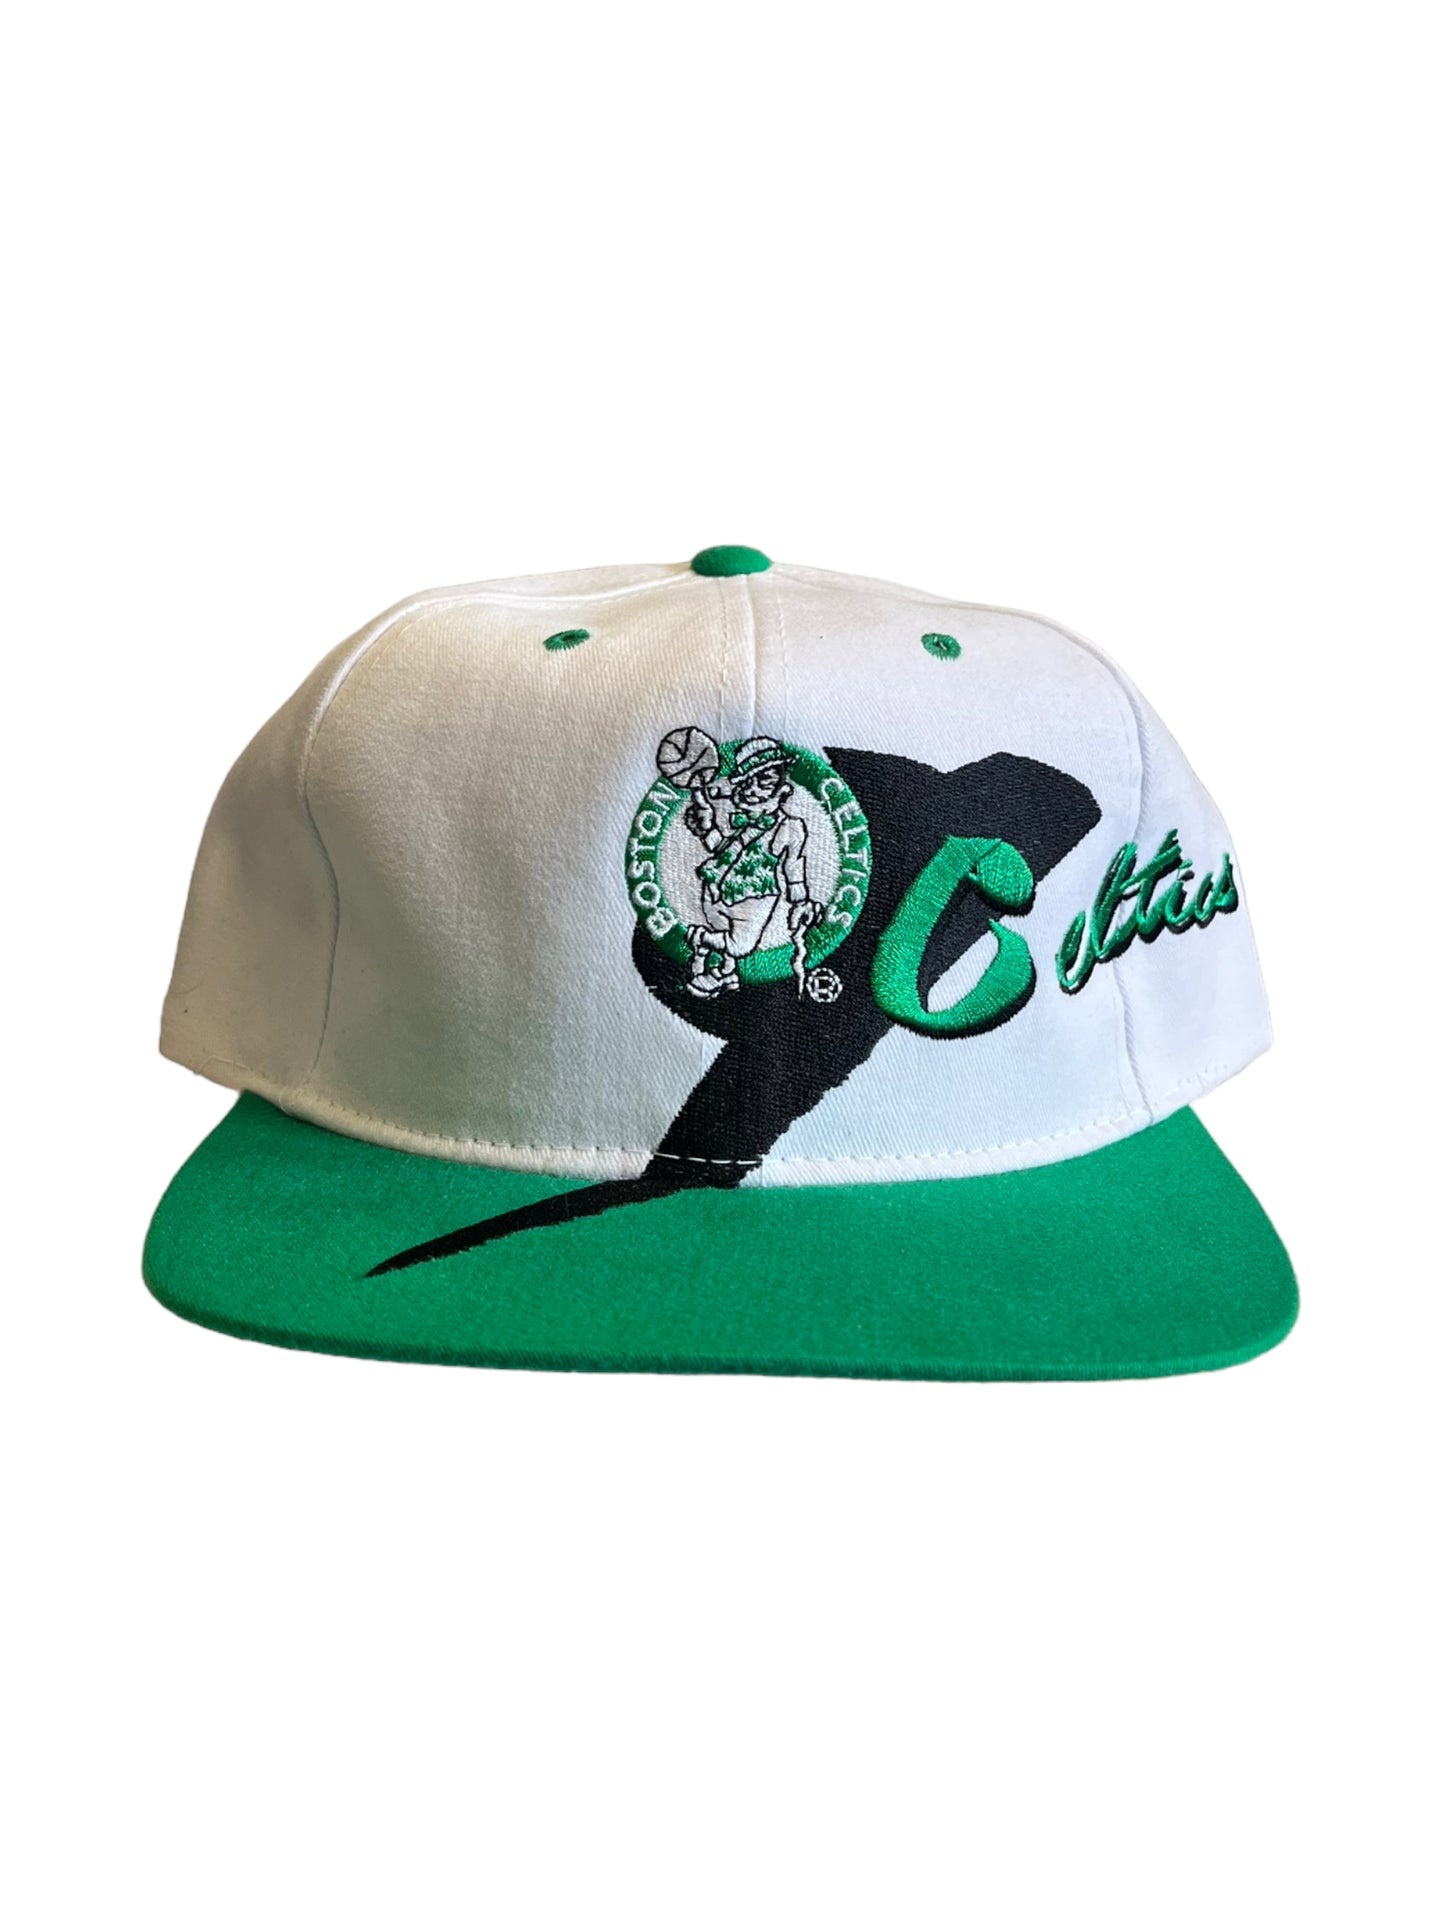 Vintage Boston Celtics SnapBack Hat Brand New